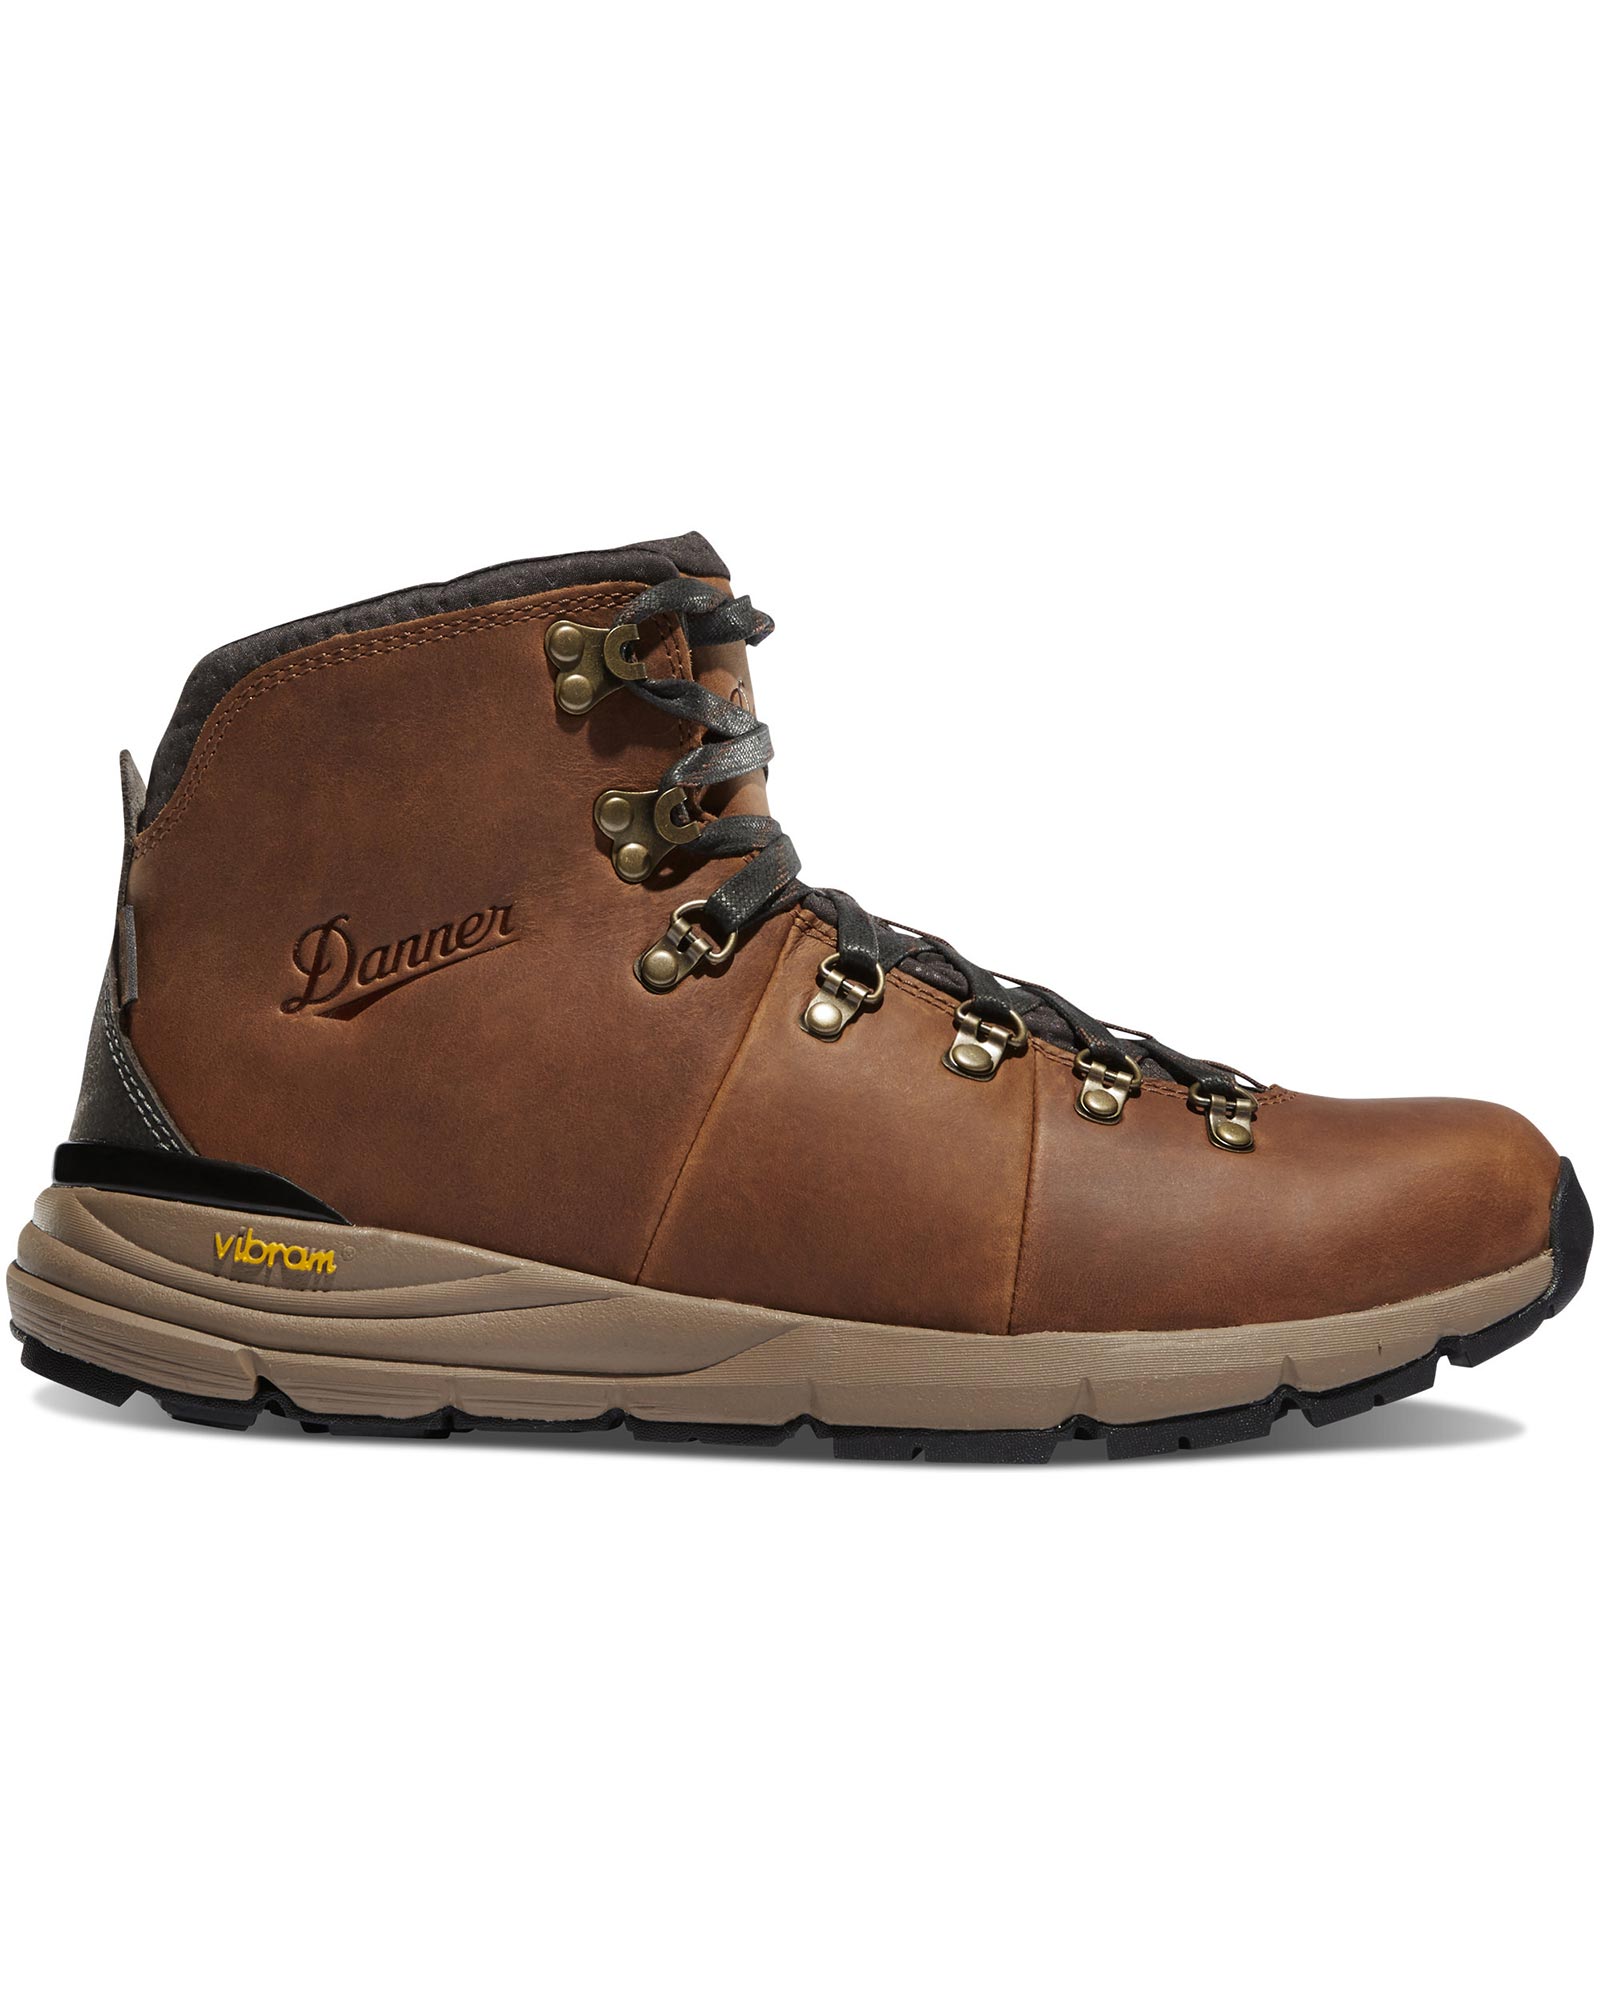 Danner Men’s Mountain 600 4.5" Boots - Rich Brown UK 9.5